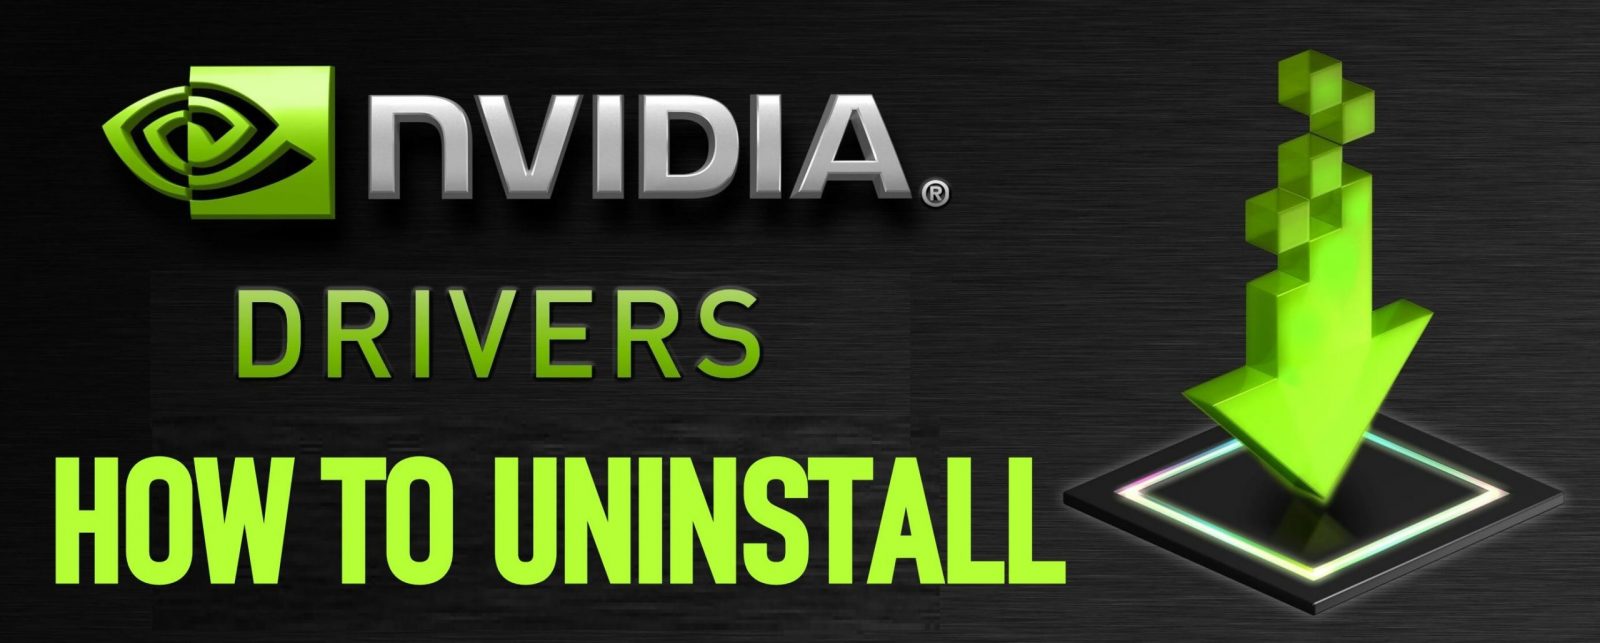 windows insider cannot install latest nvidia drivers